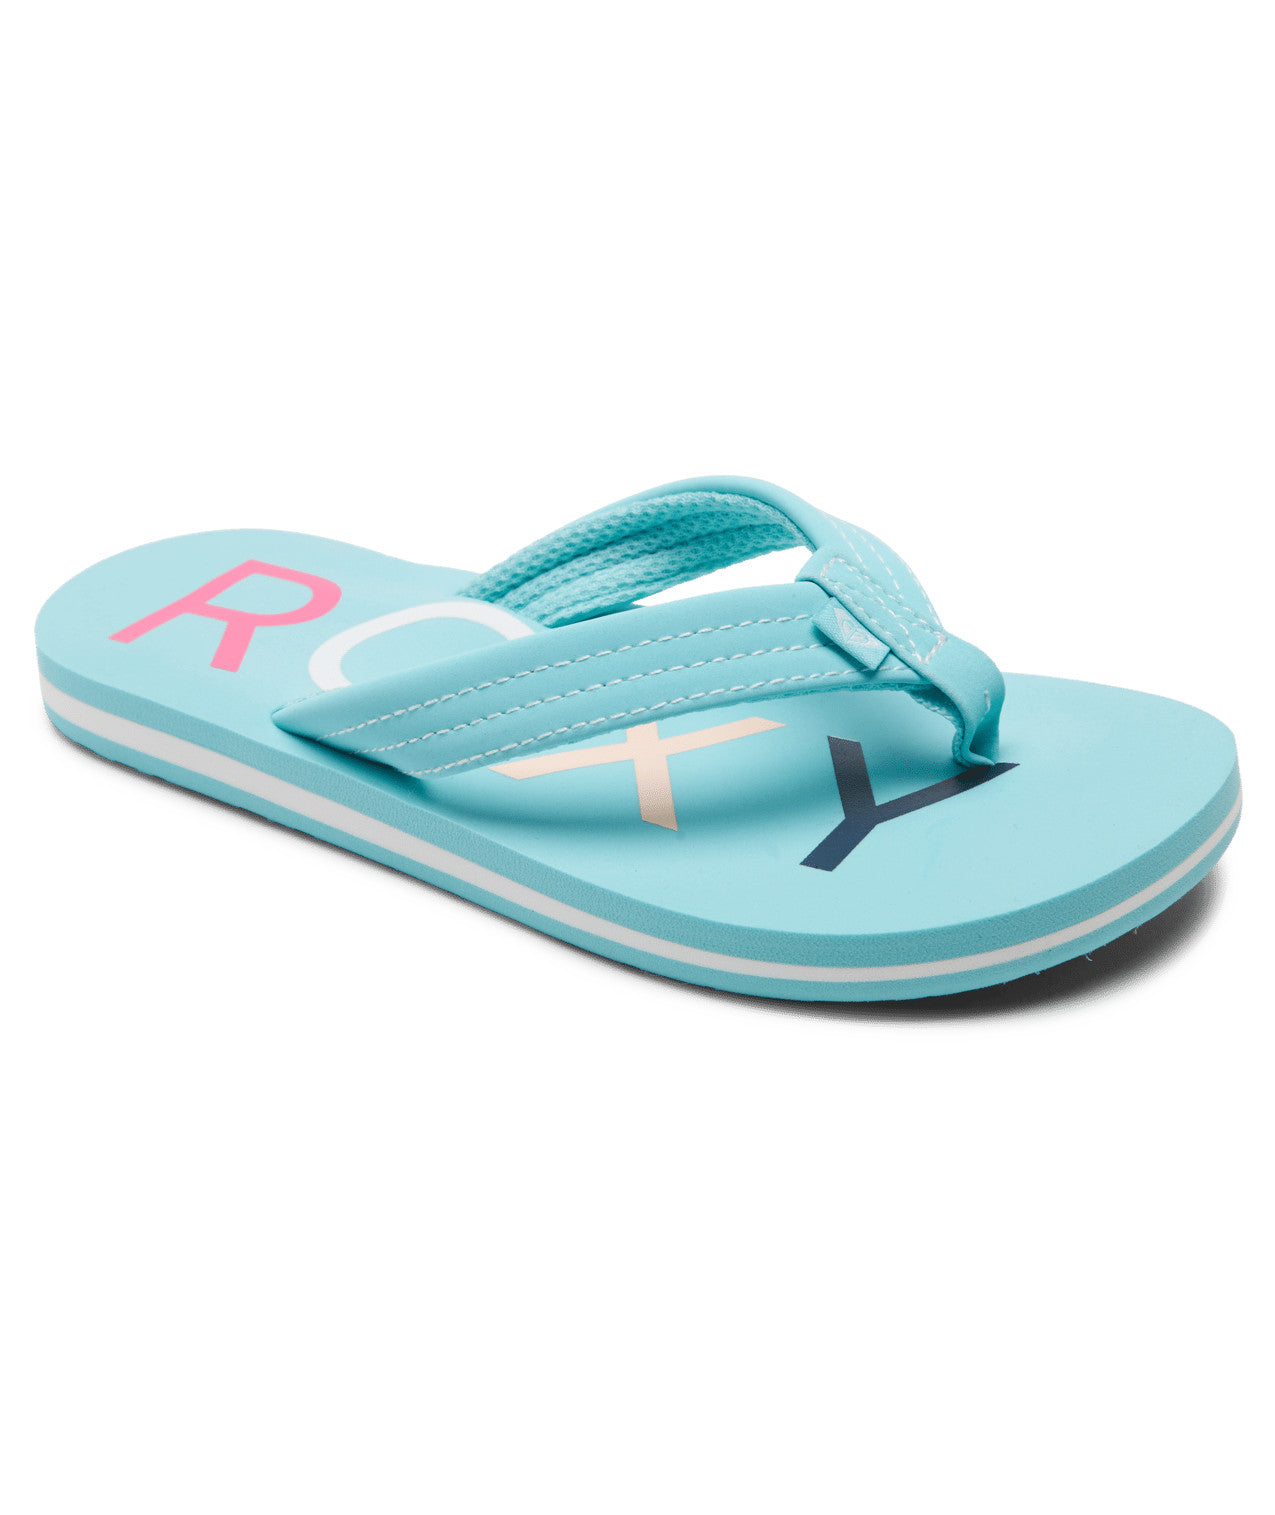 Roxy Vista 3 Girls Sandal LTB-Light Blue 5 Y